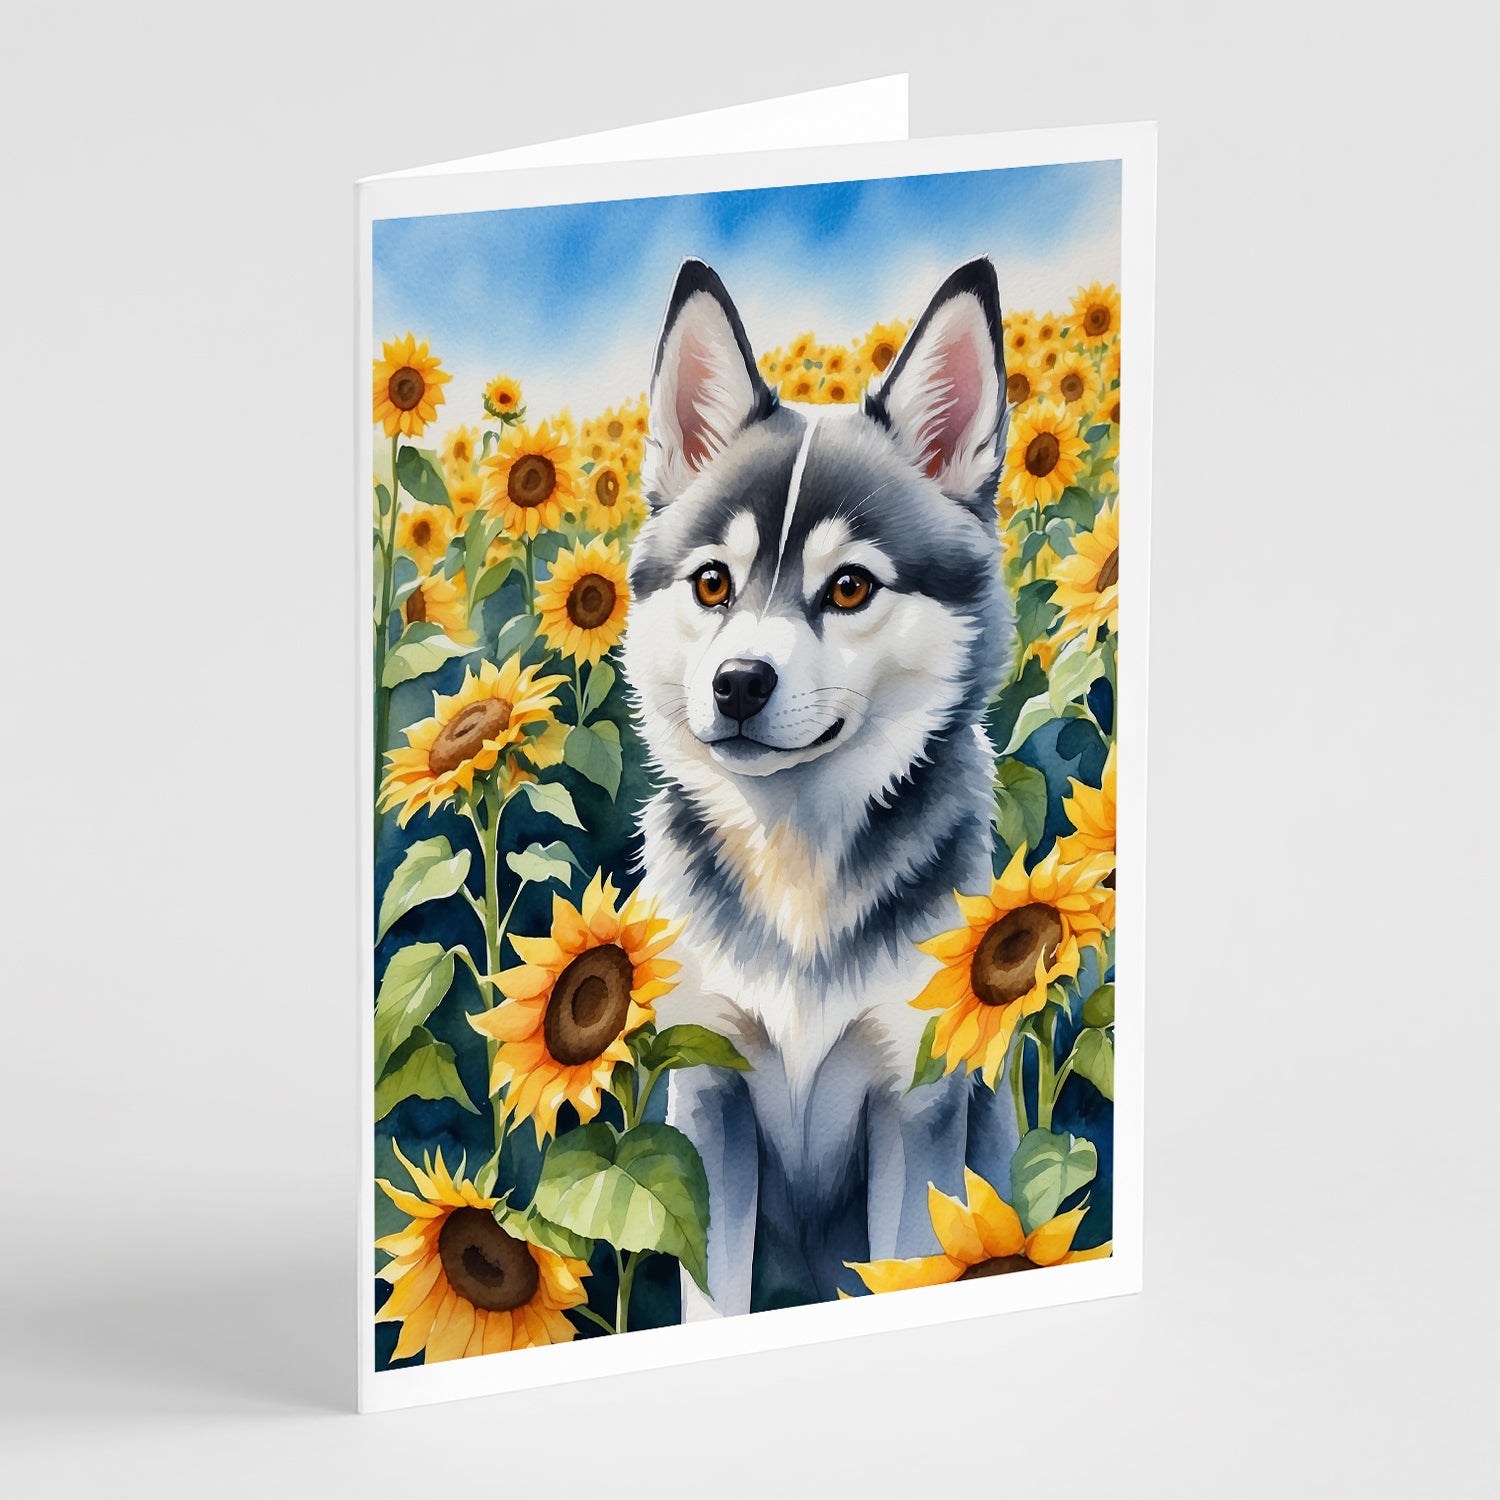 Buy this Alaskan Klee Kai in Sunflowers Greeting Cards Pack of 8